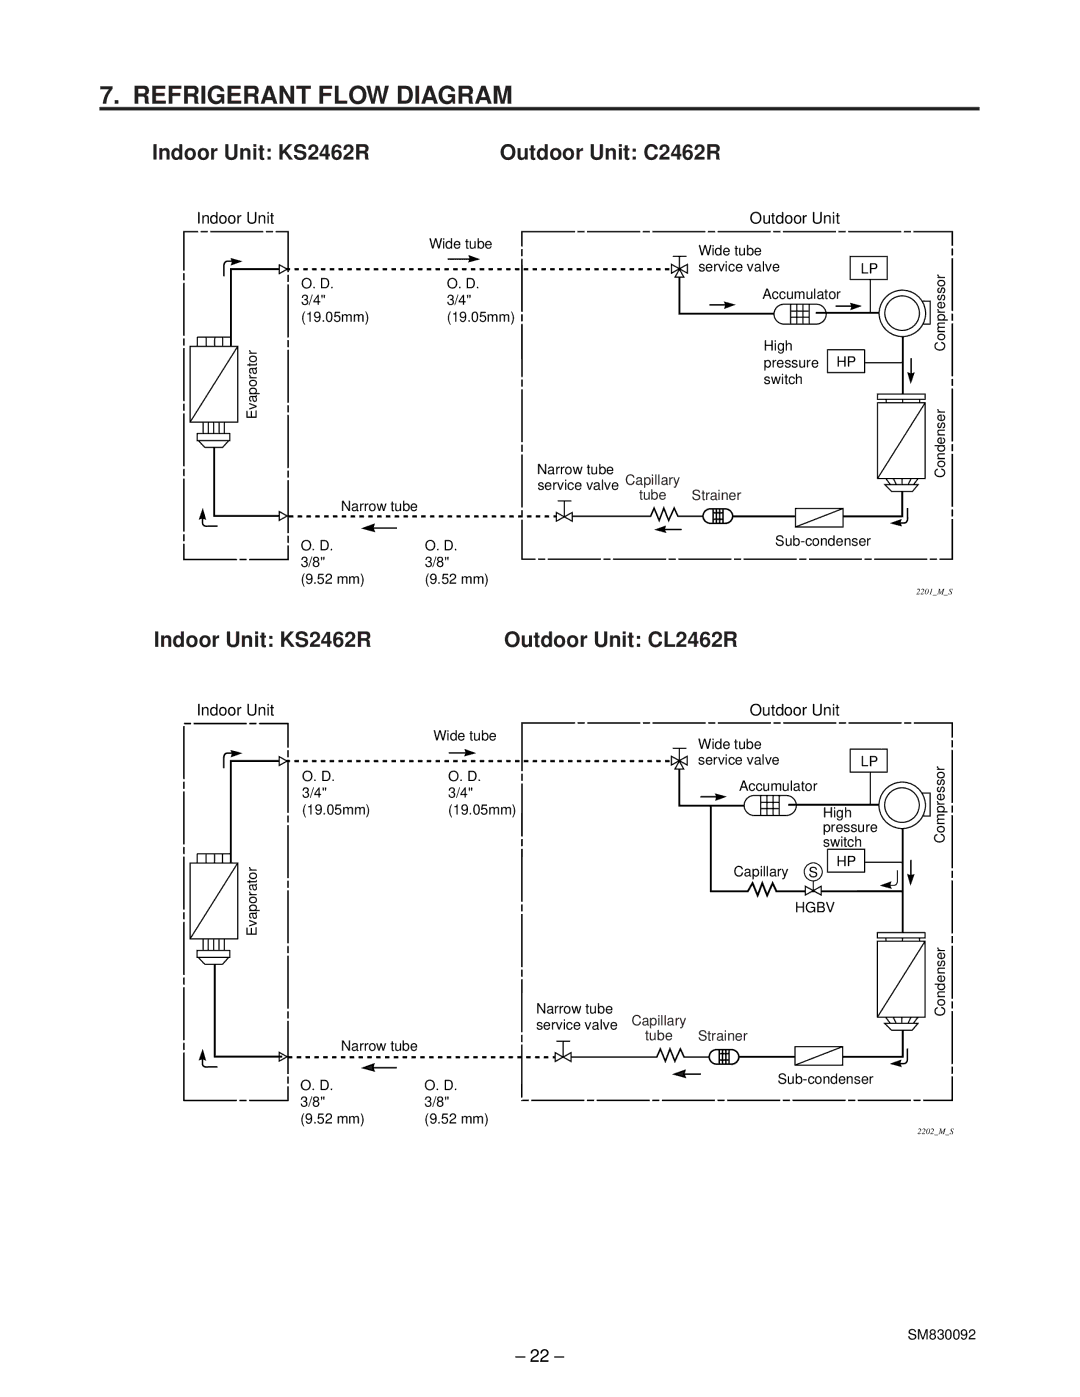 Sanyo C2462R, CL2462R service manual Refrigerant Flow Diagram, Hgbv 